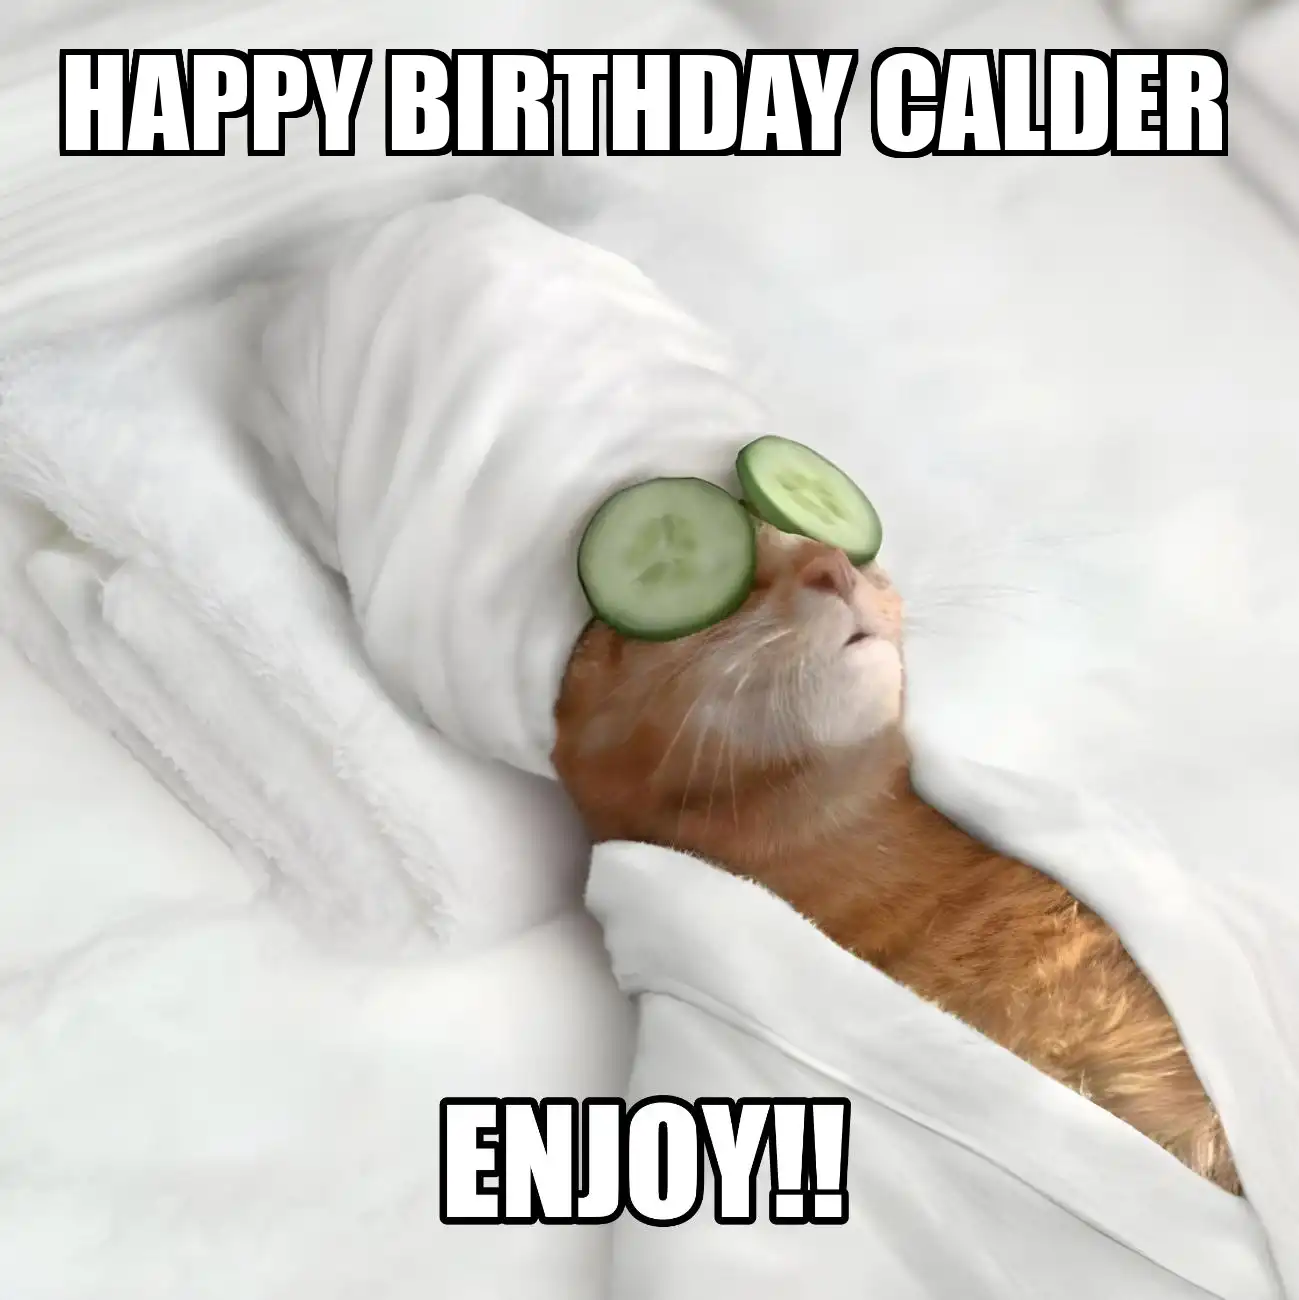 Happy Birthday Calder Enjoy Cat Meme